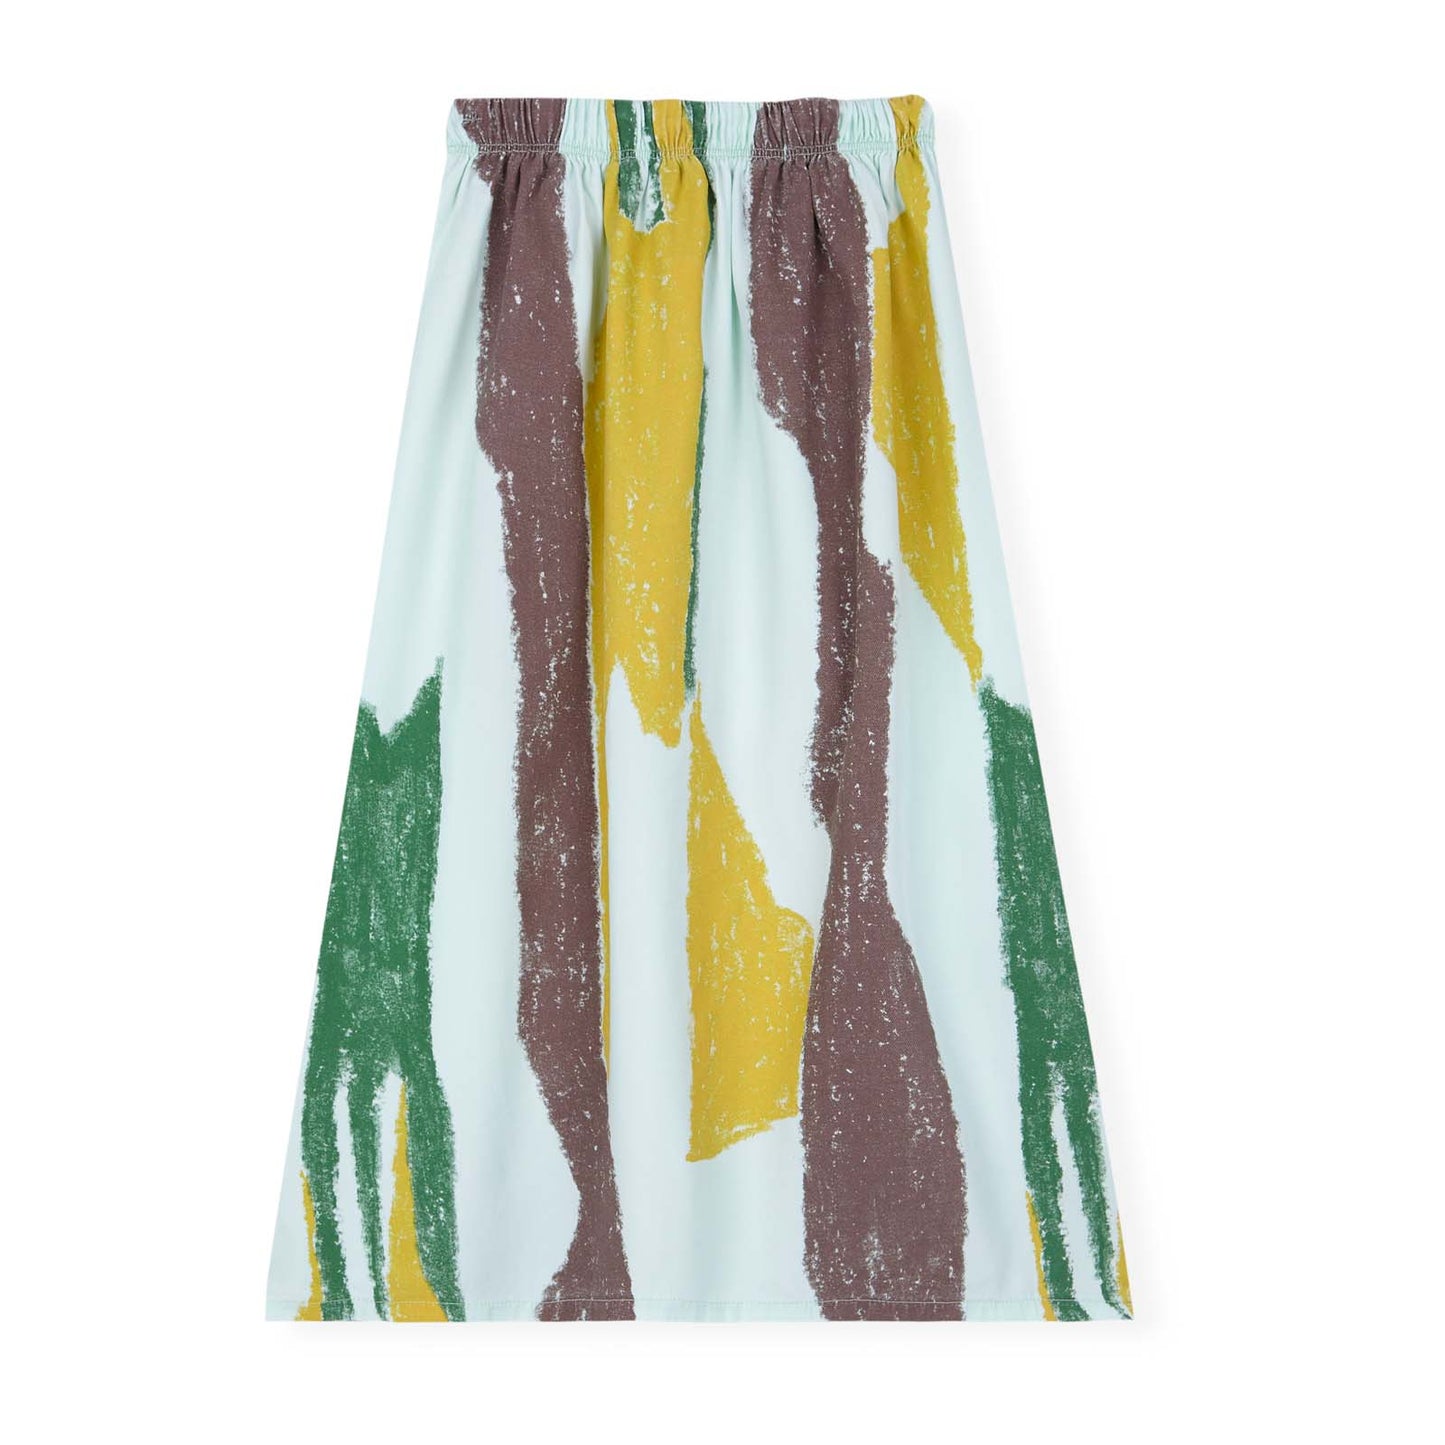 Camouflage Midi Skirt